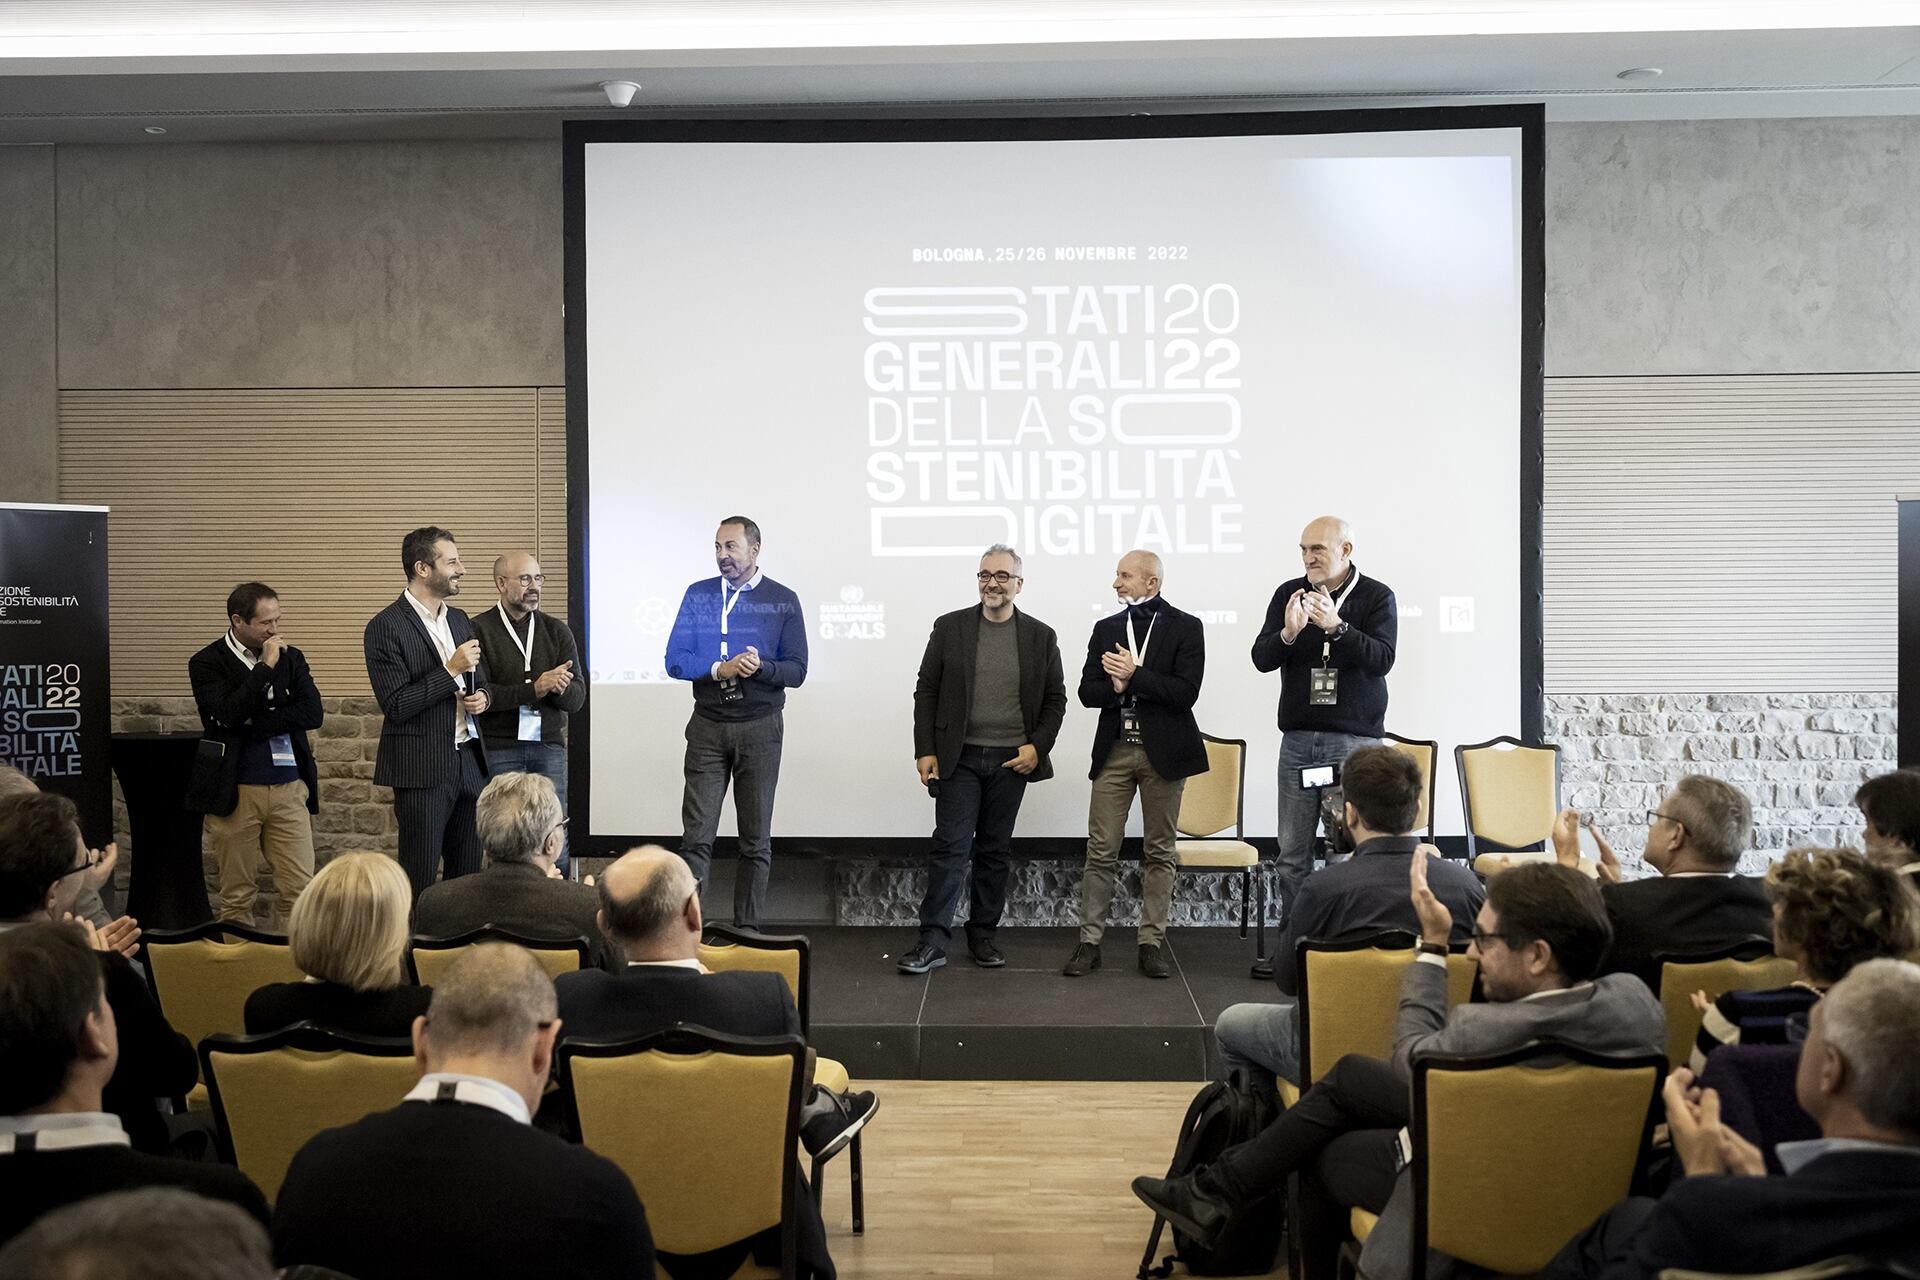 Stefano Epifani: organizačný výbor podujatia „Stati Generali della Sostenibilità Digitale“, ktoré sa konalo v Bologni (Taliansko) 25. a 26. novembra 2022